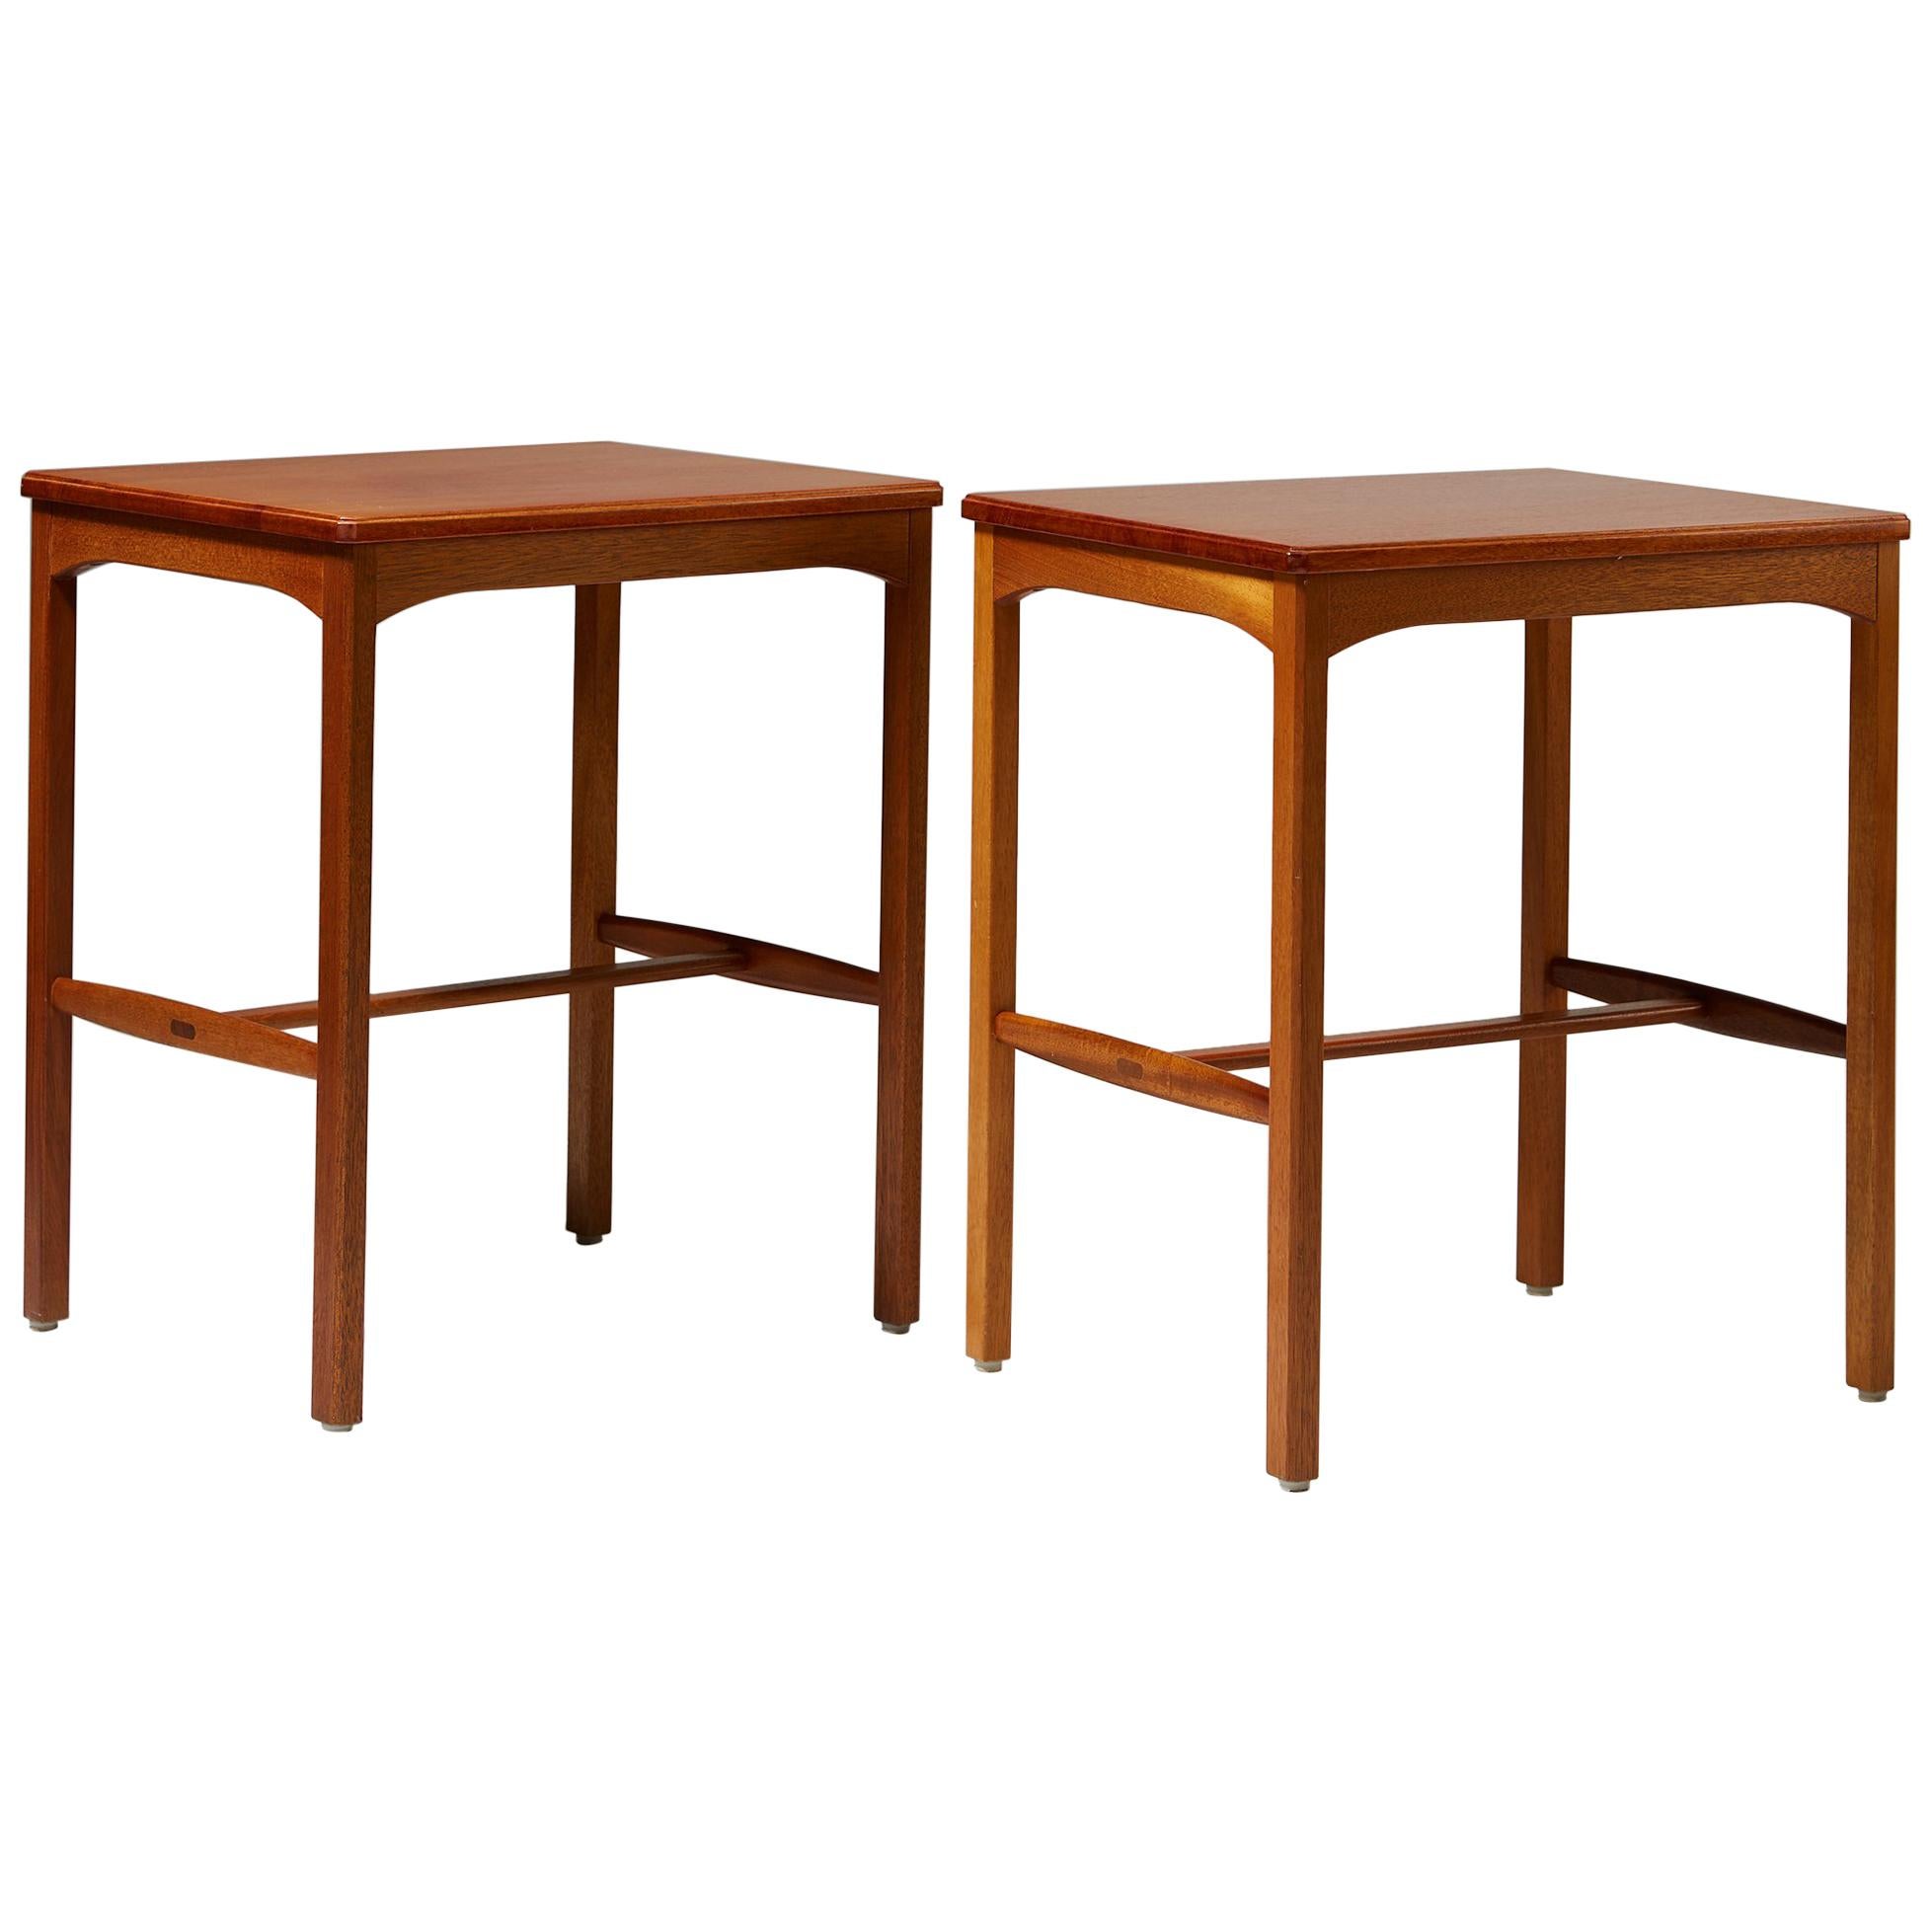 Pair of Side Tables Designed by Carl Malmsten for Carl Löfving & Söner, Sweden